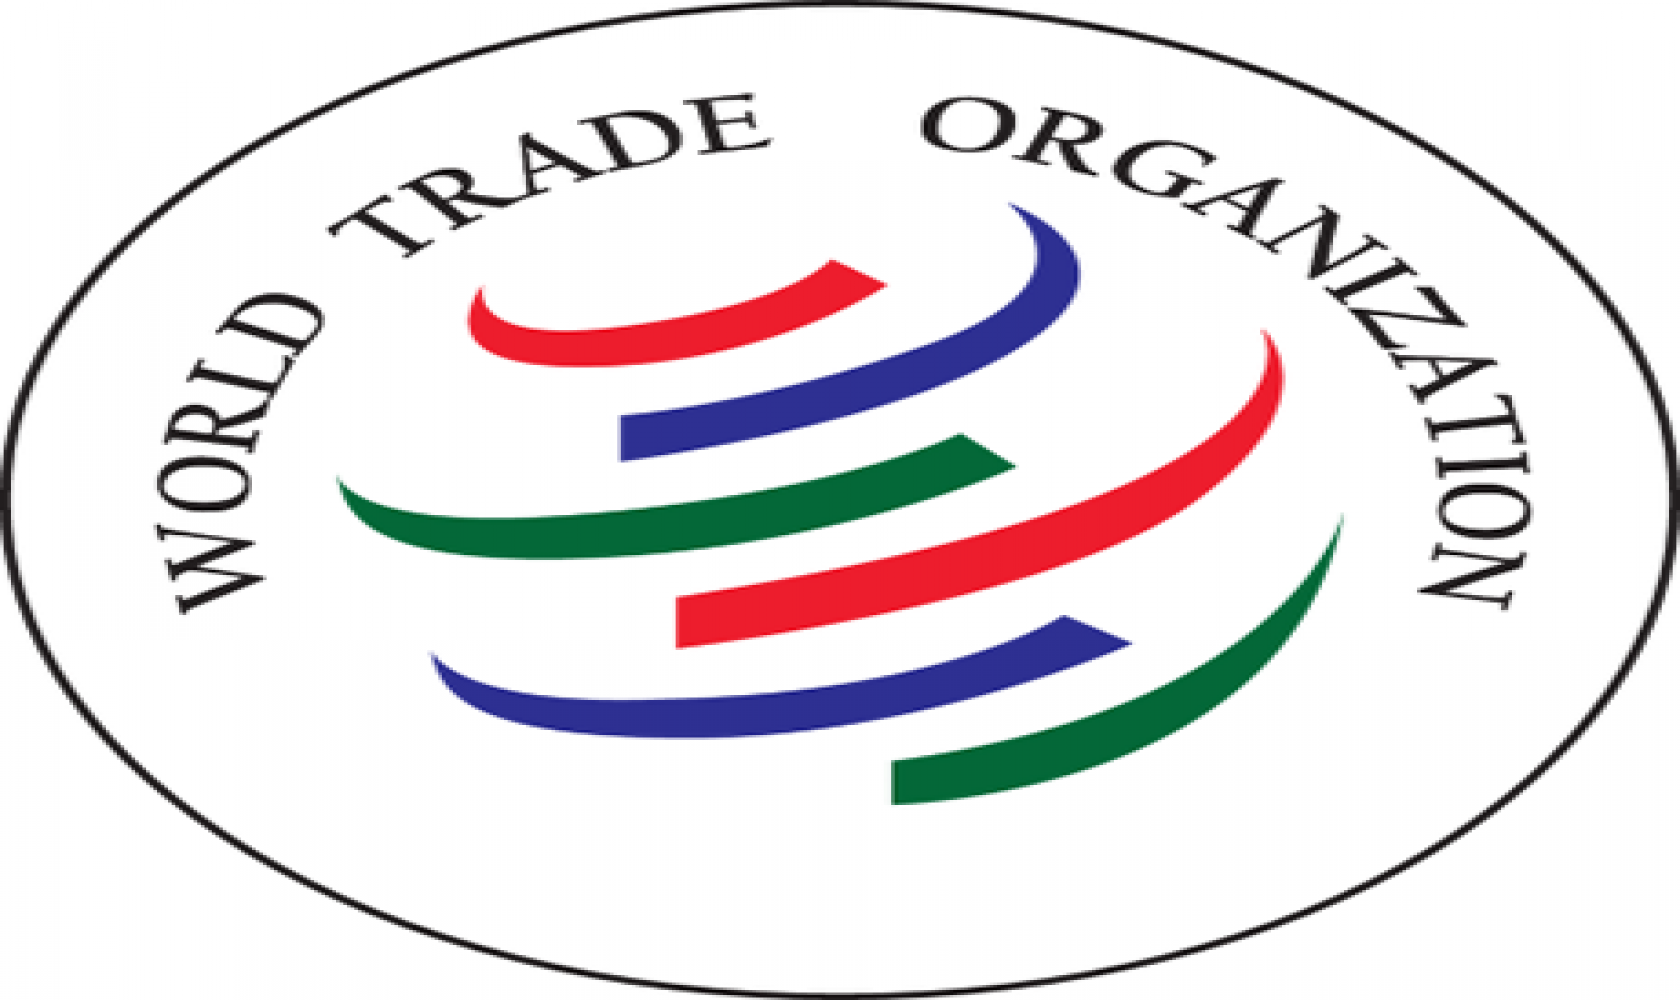 The World Trade Organization (WTO) is an intergovernmental organization which regulates international trade.